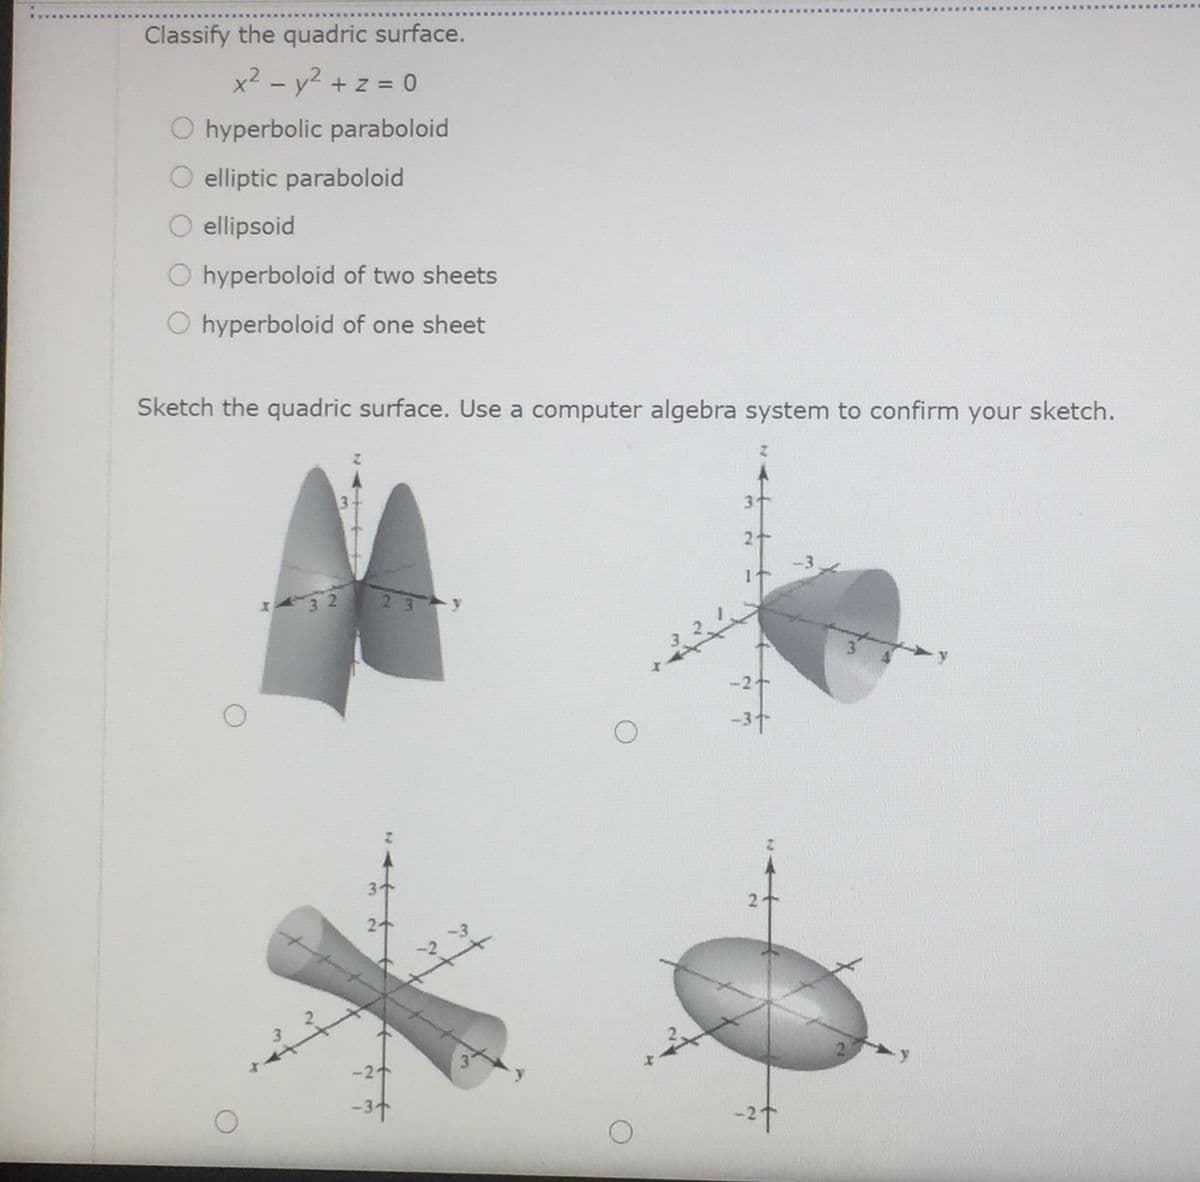 Classify the quadric surface.
x² - y2 + z = 0
O hyperbolic paraboloid
O elliptic paraboloid
ellipsoid
O hyperboloid of two sheets
O hyperboloid of one sheet
Sketch the quadric surface. Use a computer algebra system to confirm your sketch.
2 3
-37
3
-21
-37
-2t
2.
3.
3
